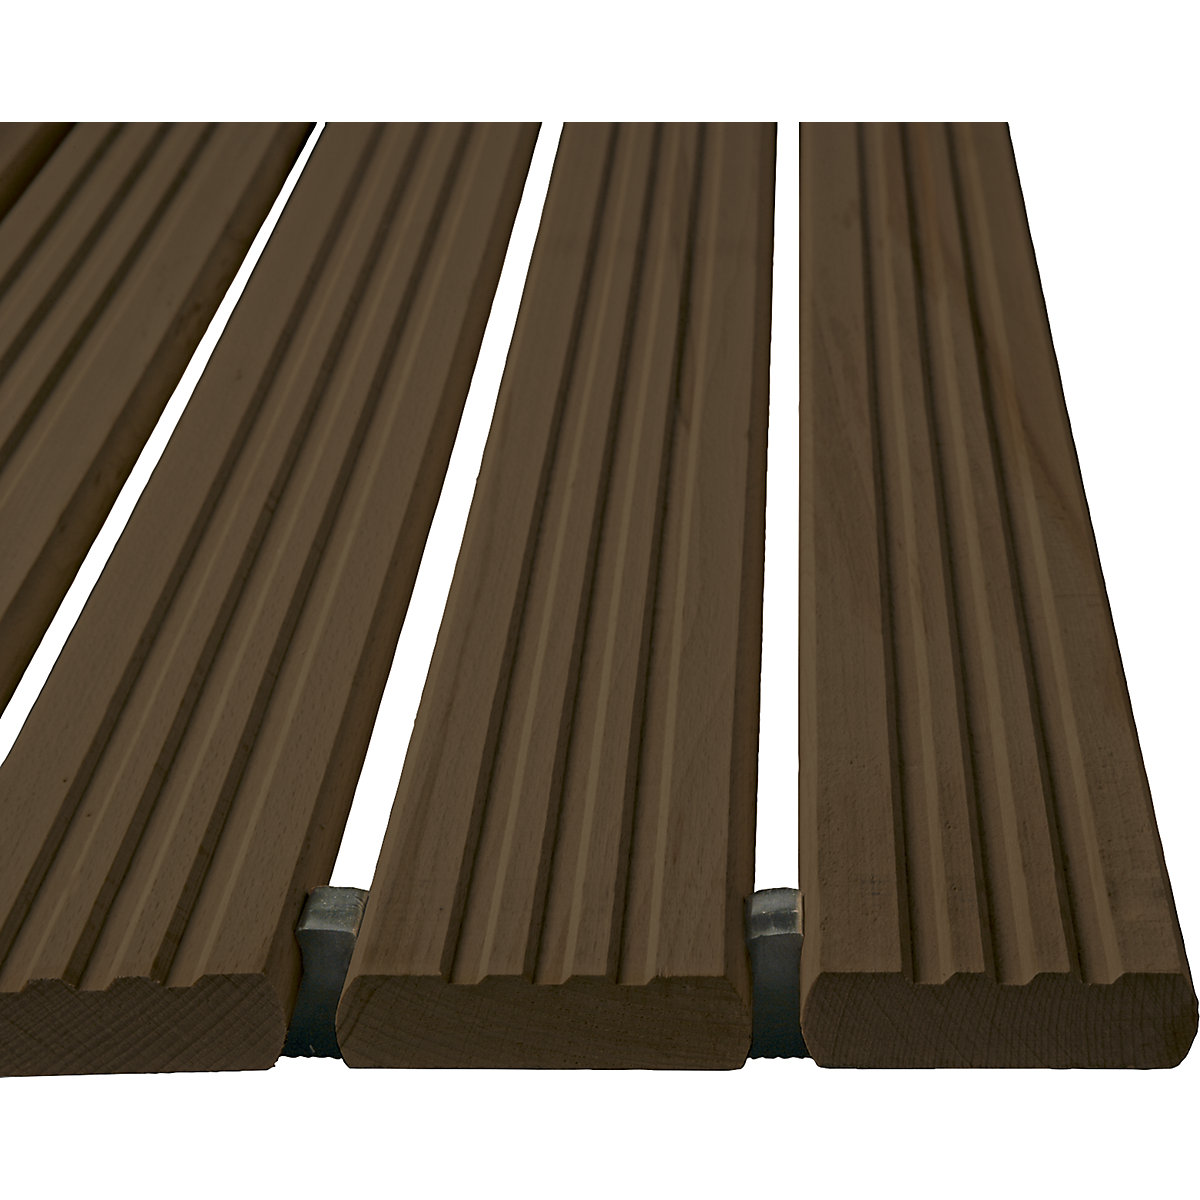 Pasarela de madera con barnizado oscuro, por metro lineal (Imagen del producto 5)